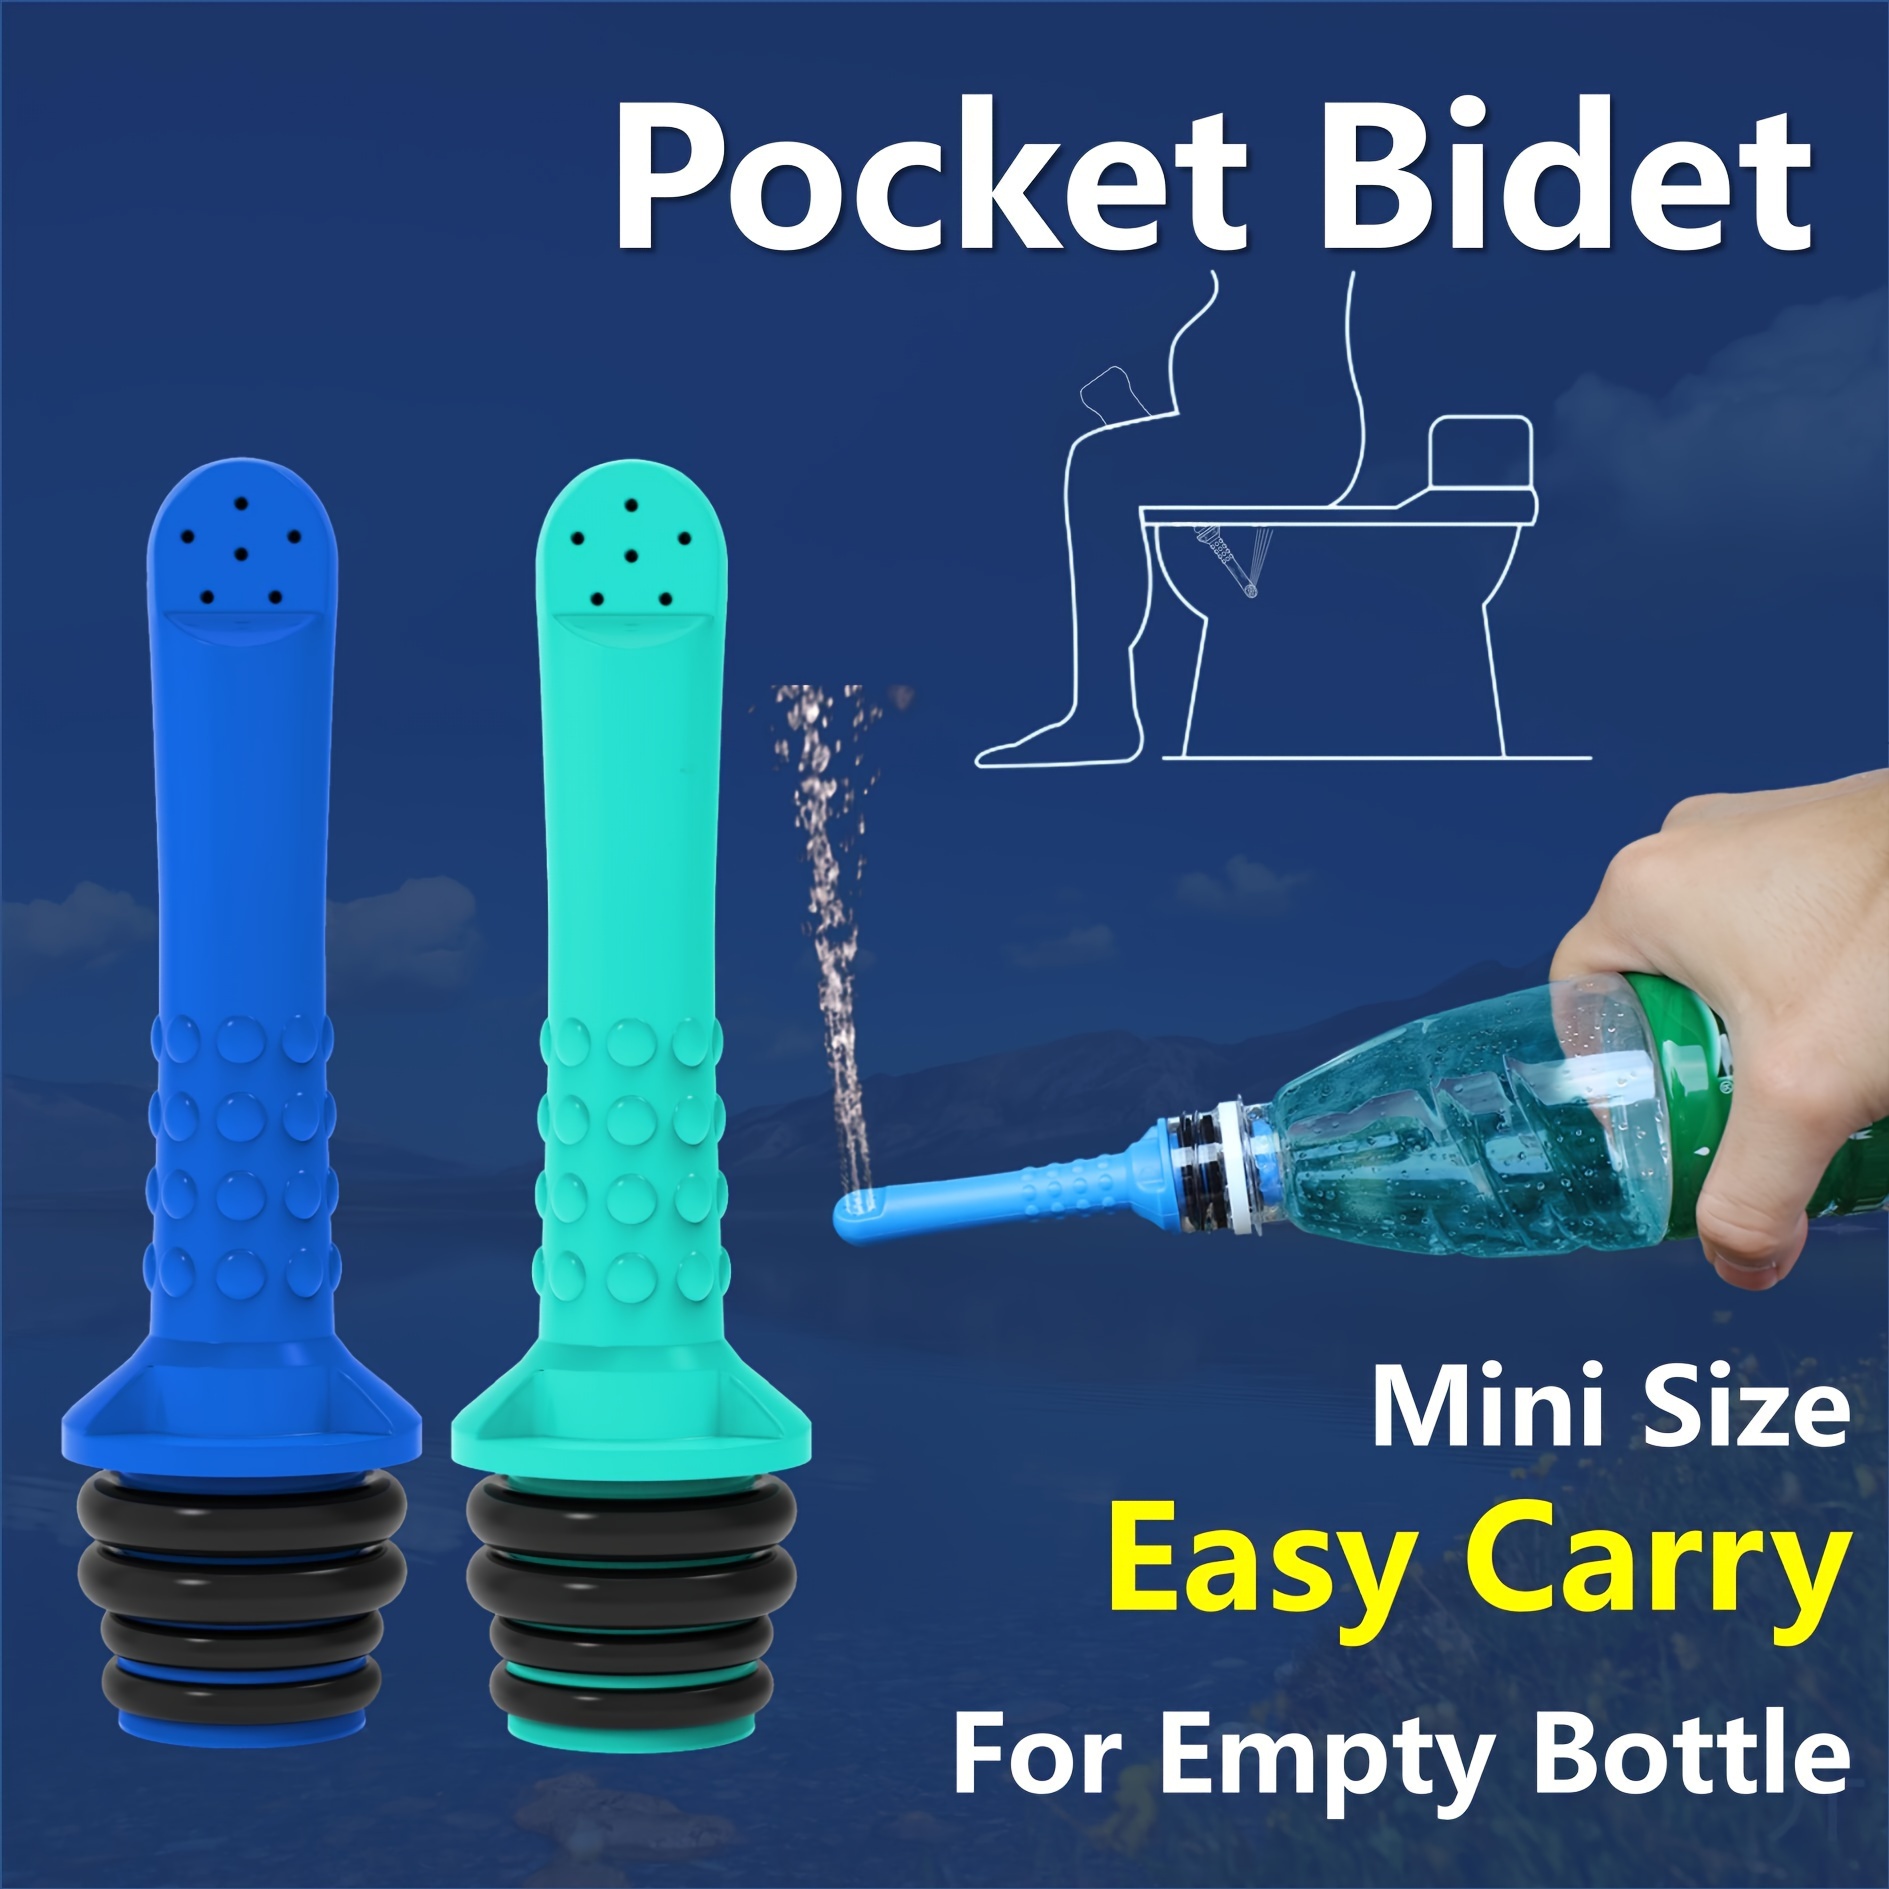 

1/2pcs Portable Bidet For Toilet Or Travel Portable Bidet Travel Bidet. Compatible With Every Bottle. Discreet, Mini, Elderly, Sprayer, Bio, Personal, Handheld